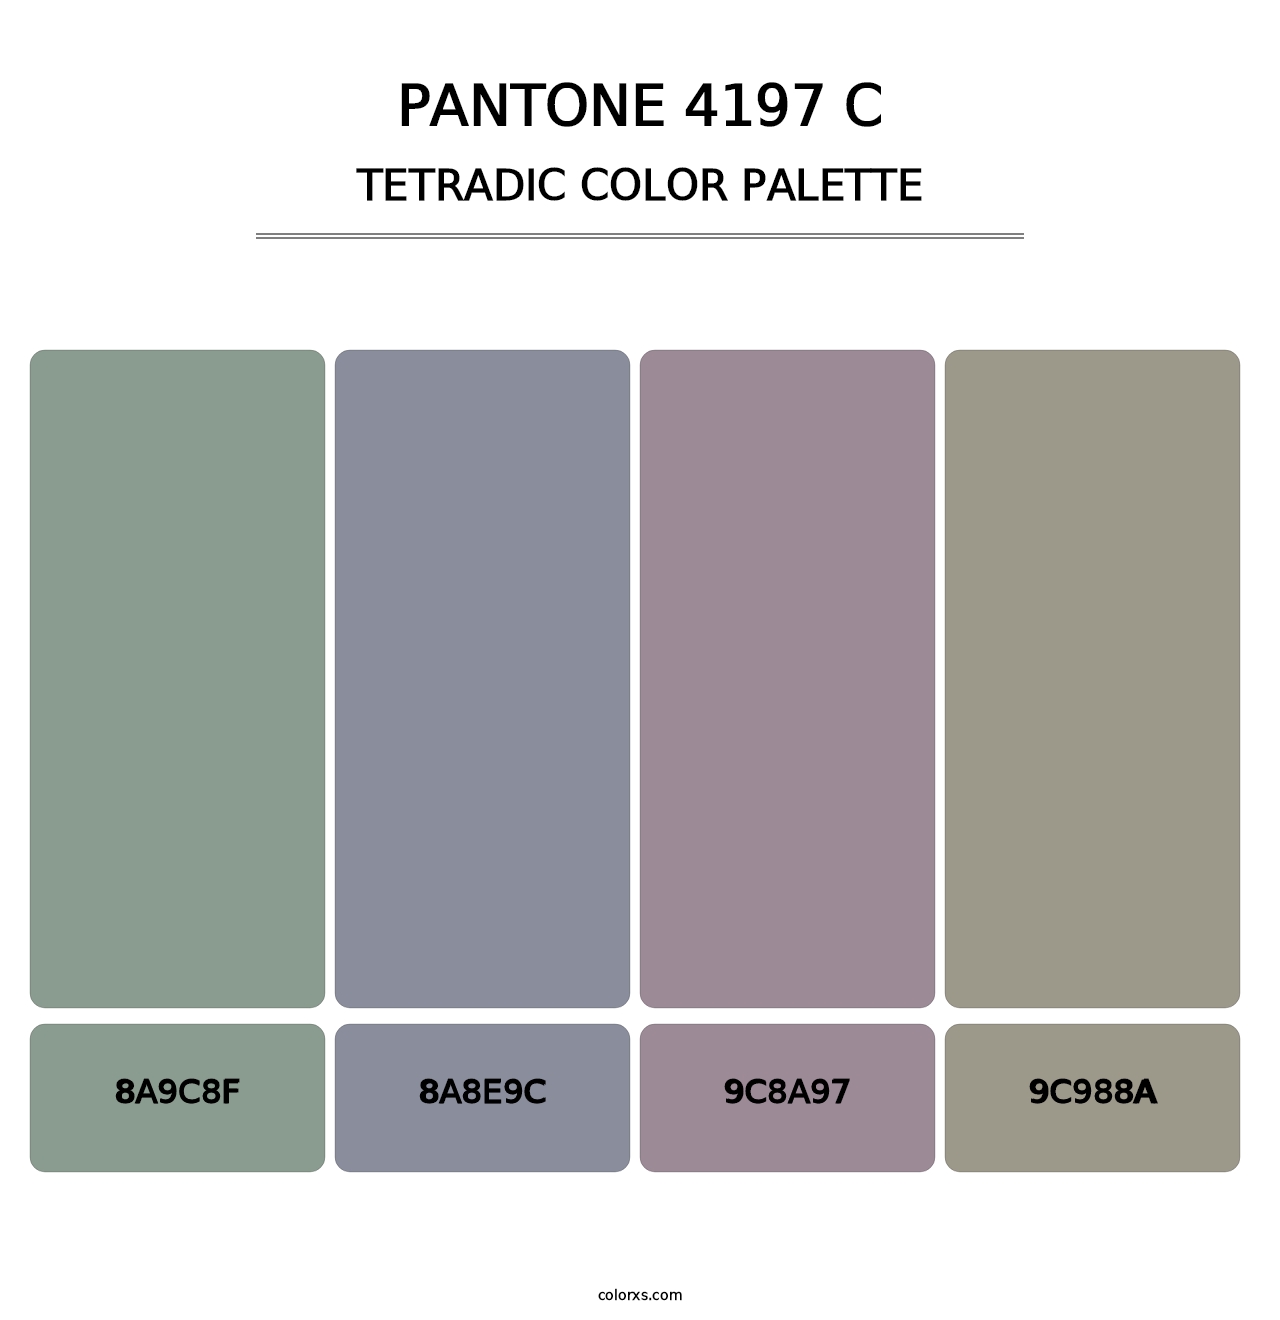 PANTONE 4197 C - Tetradic Color Palette